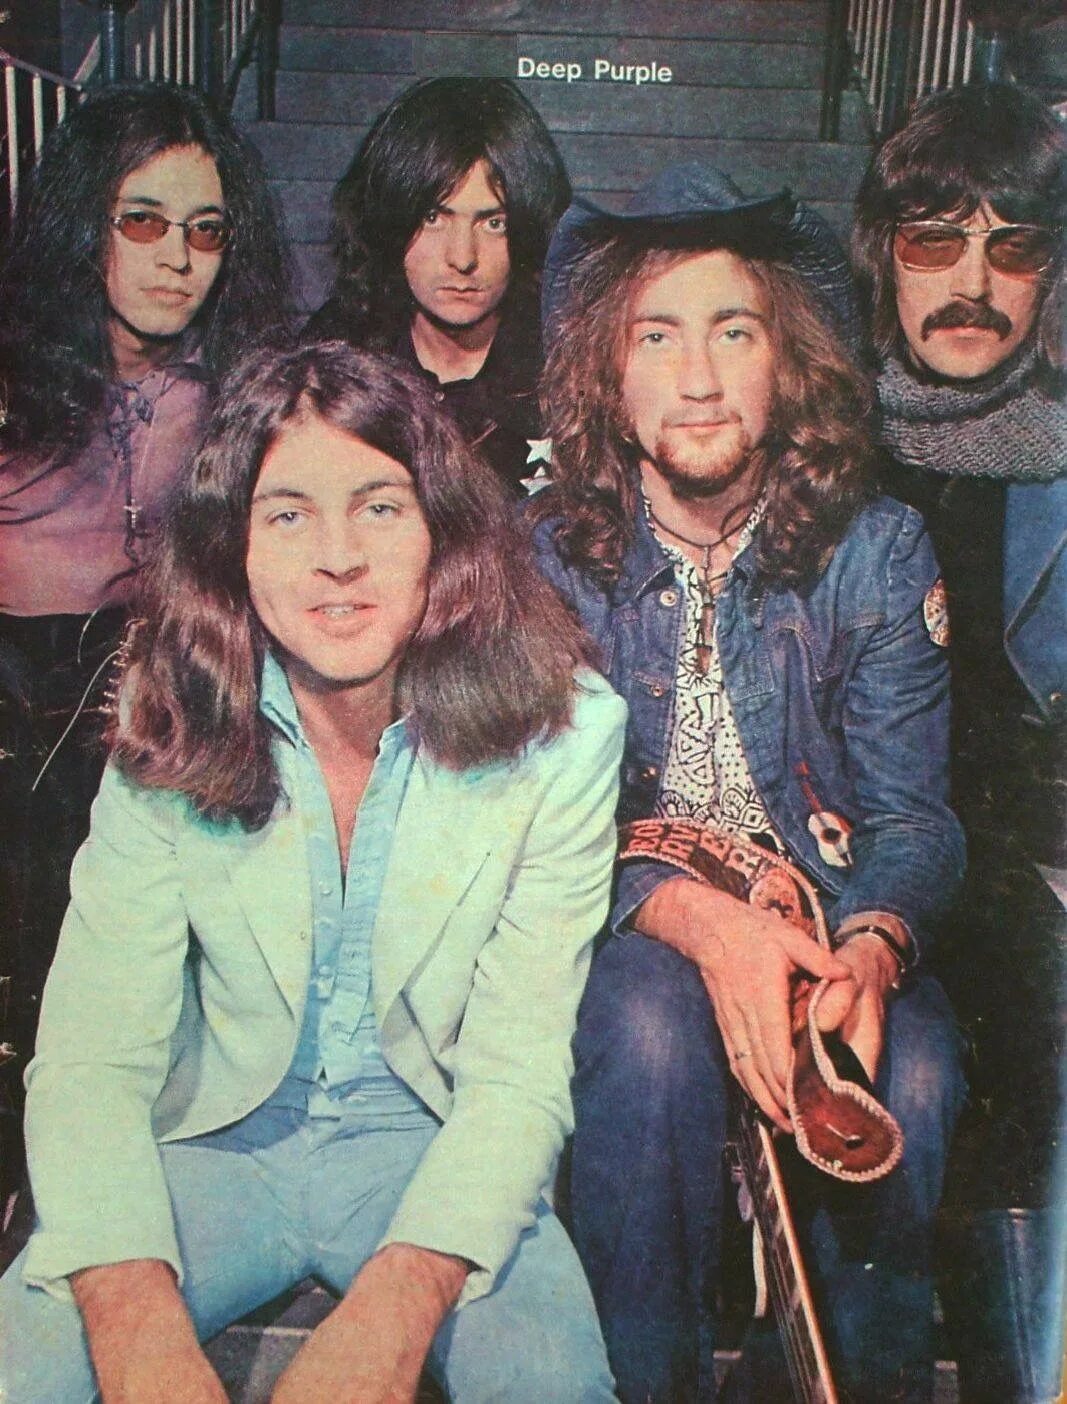 Группа дип перпл. Группа Deep Purple 1970. Группа дип перпл 1970. Дип перпл (Deep Purple). Музыка дип перпл